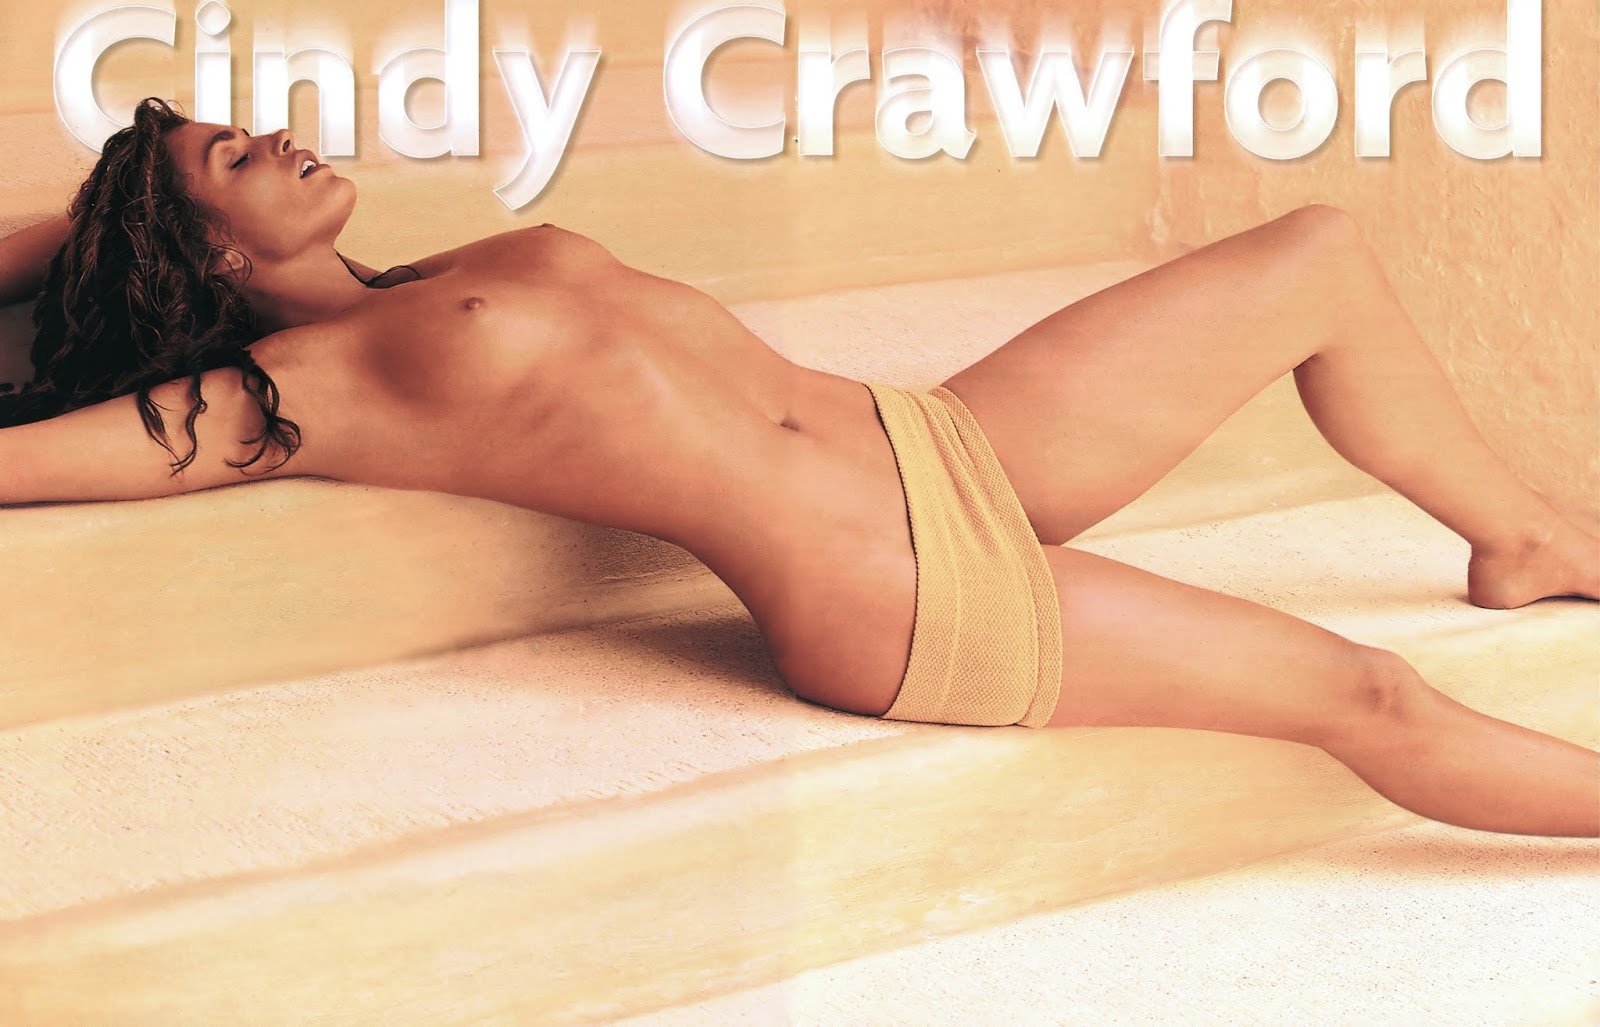 cindy crawford nude playboy pics cindy crawford playboy nude - On...